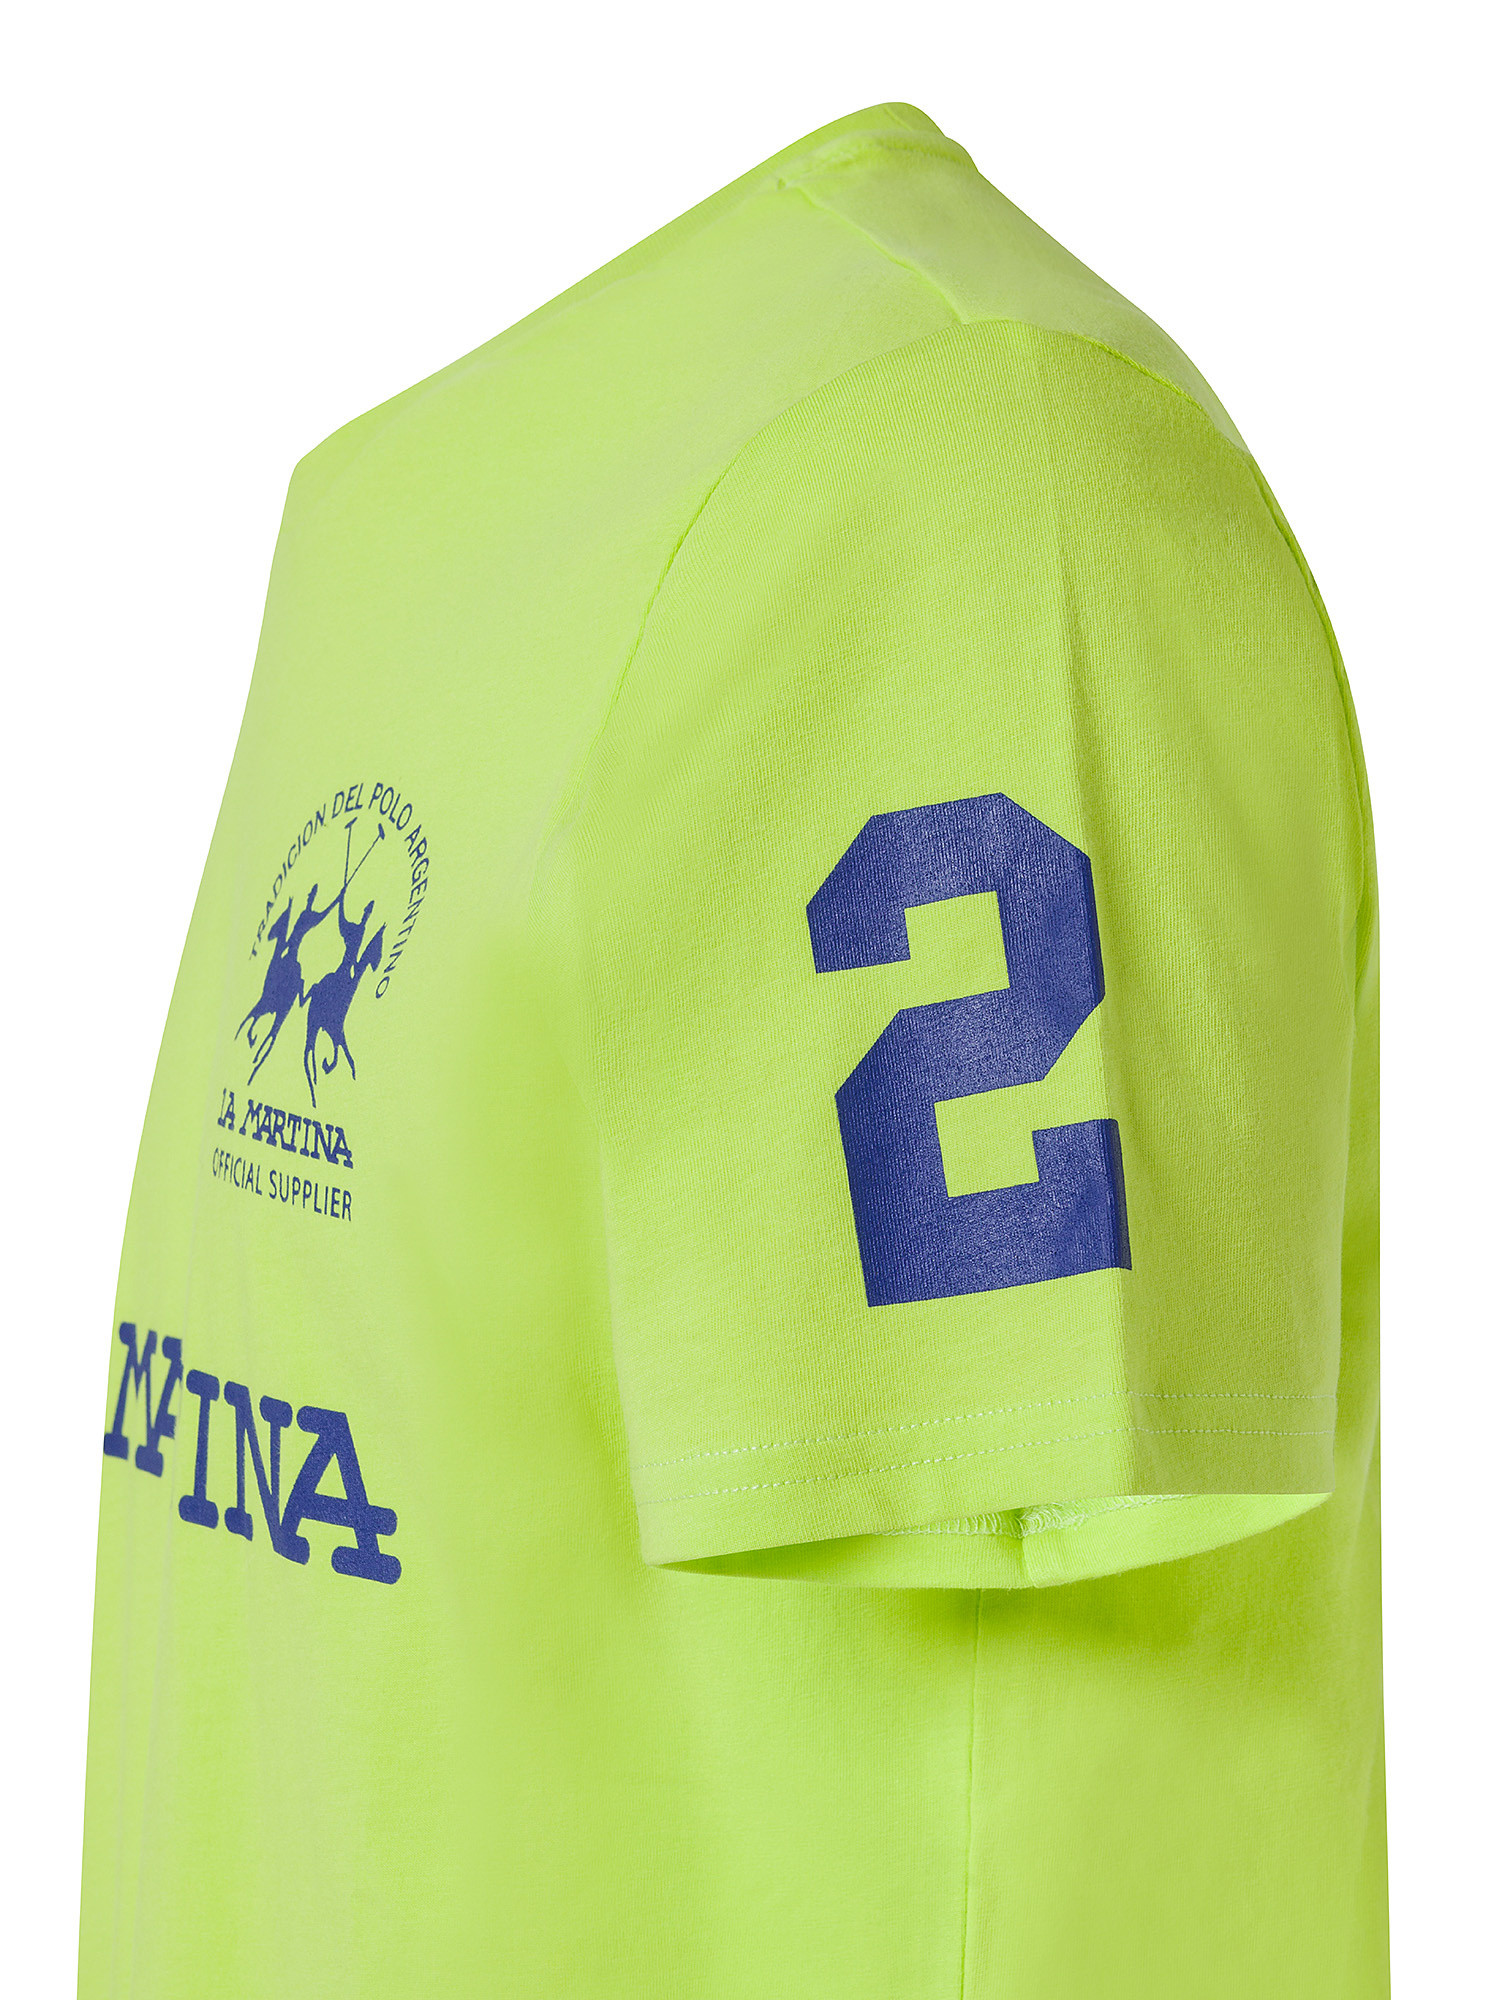 La Martina - T-shirt maniche corte in cotone jersey, Giallo, large image number 2